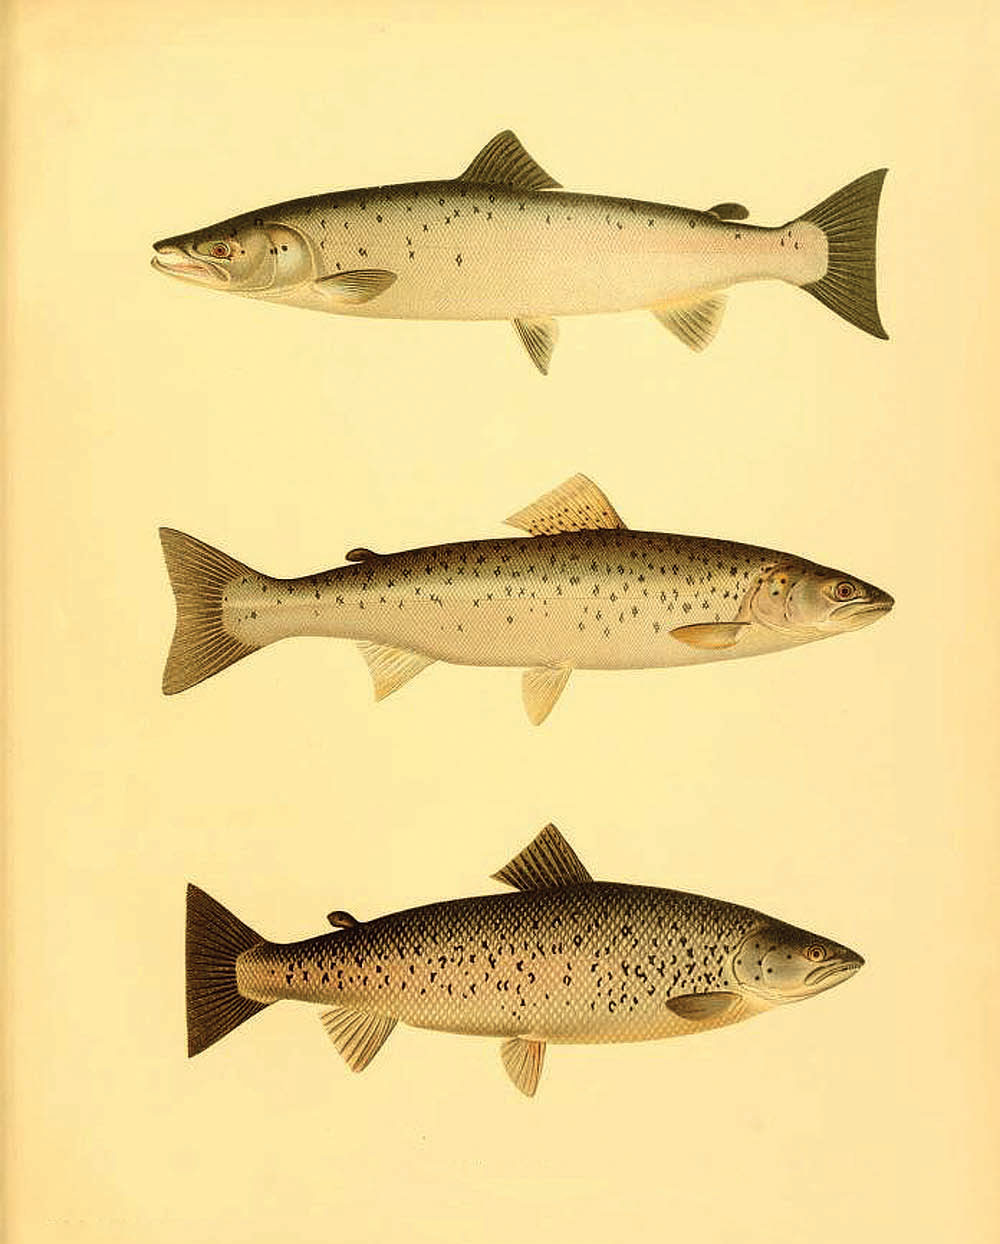 The Atlantic salmon is an anadromous fish species